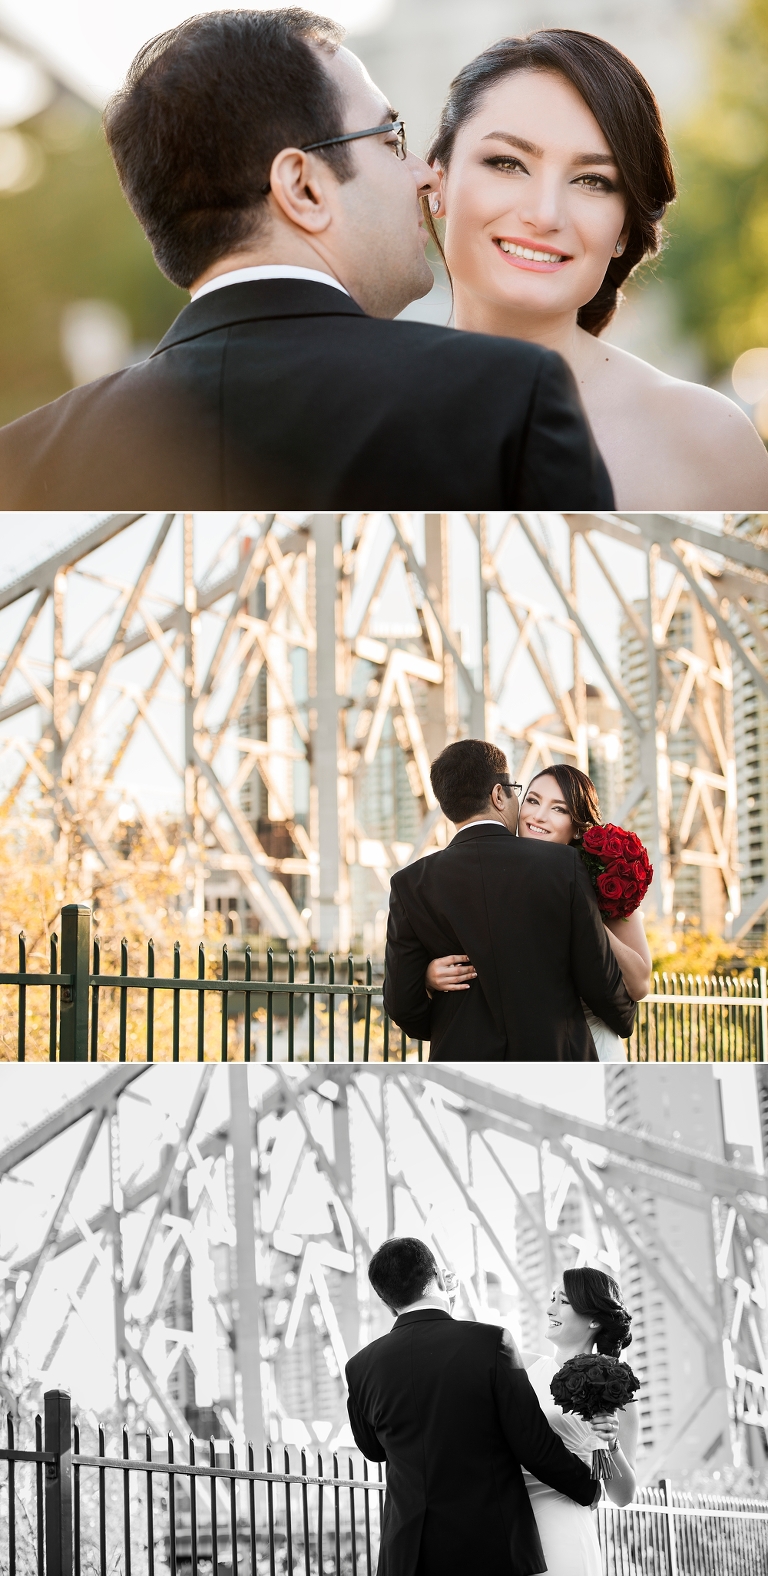 Forever Yours Photography - Brisbane Wedding Photographer